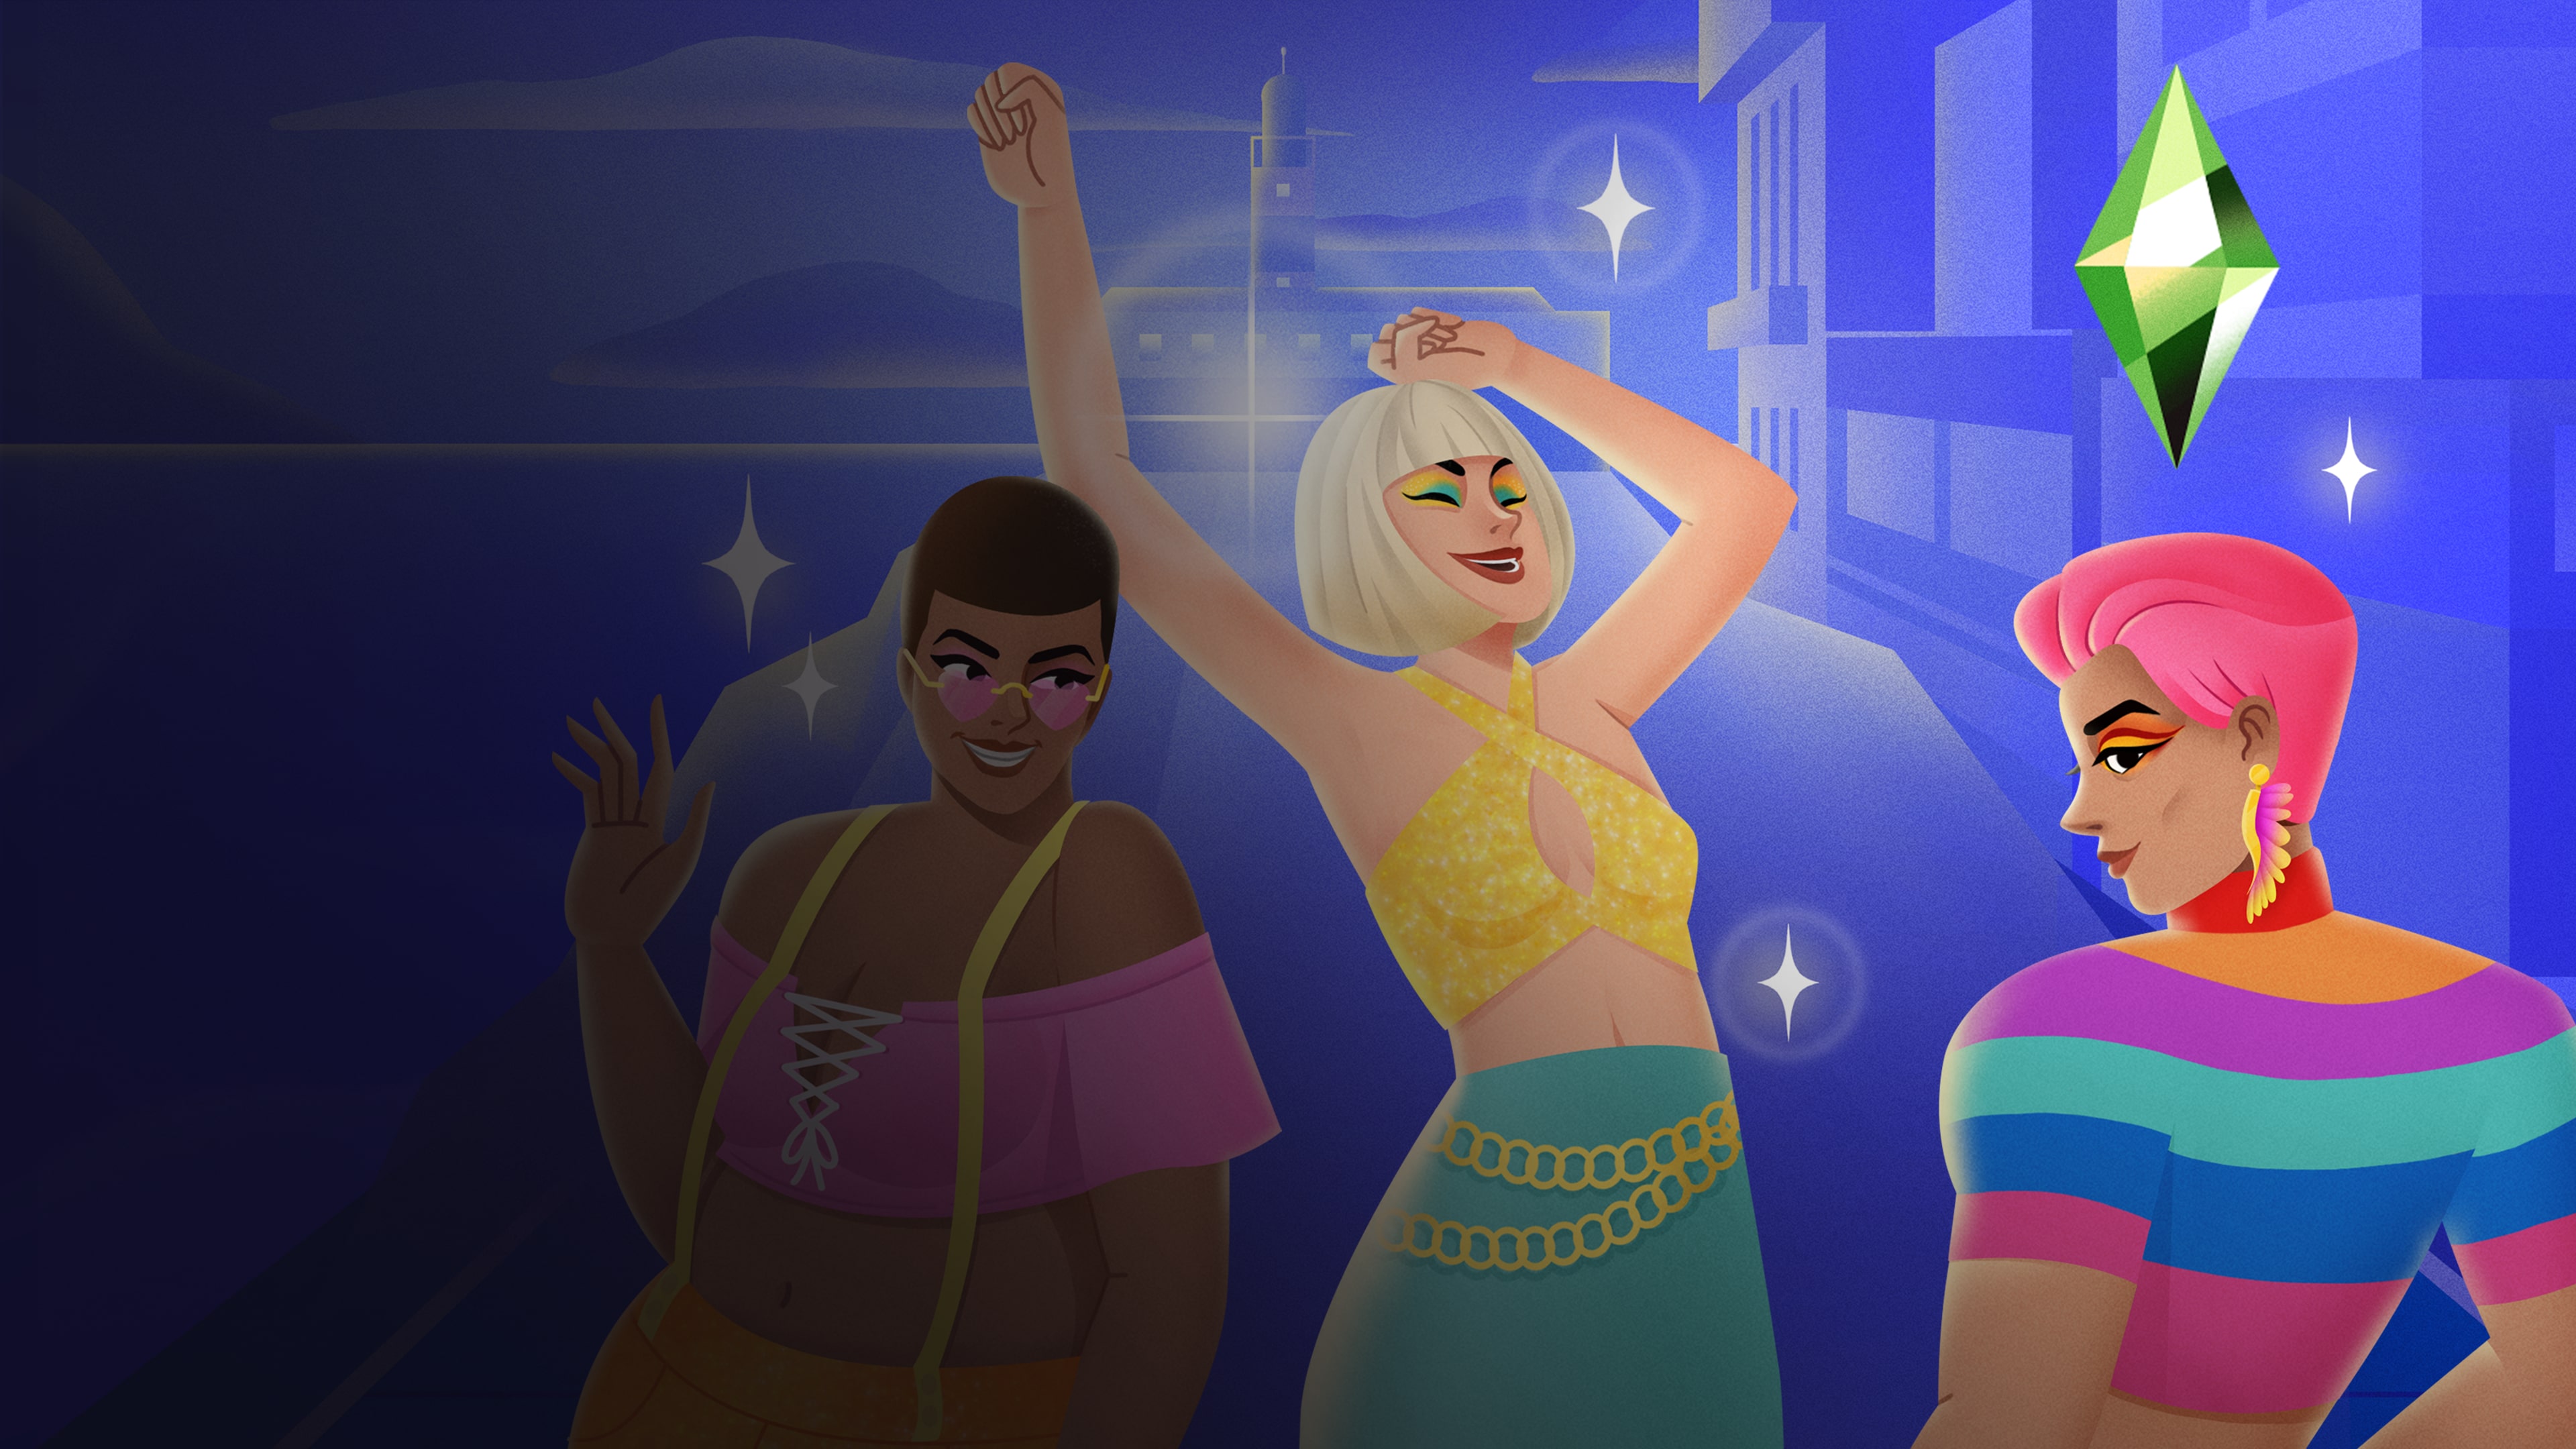 The Sims™ 4 Carnaval Streetwear Kit